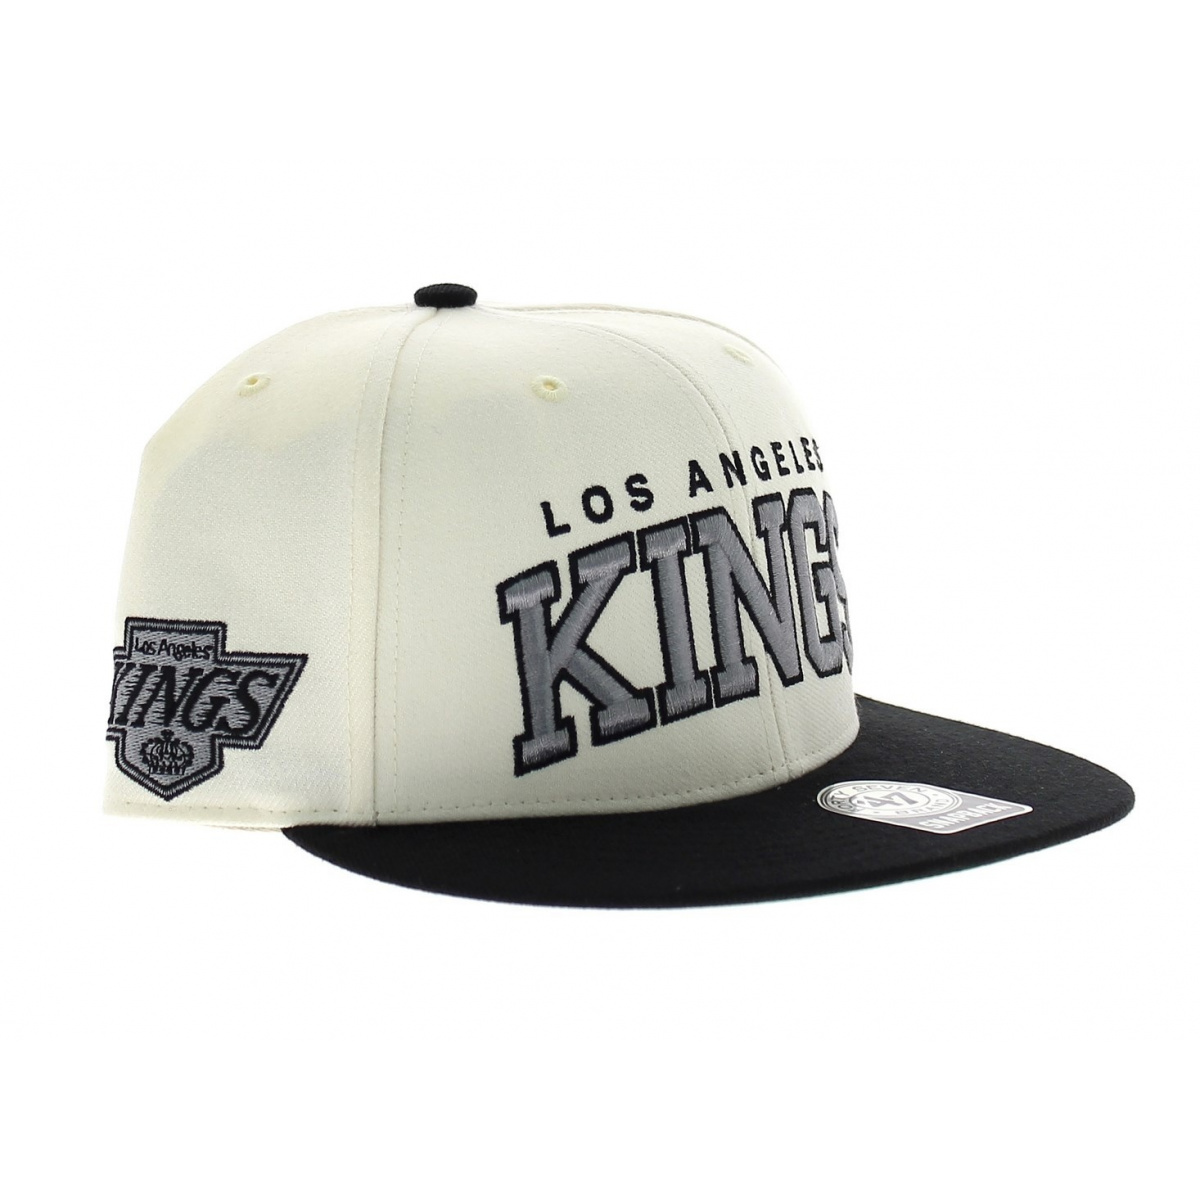 Los Angeles Kings Fashion Cap Vintage Cap Sports Cap for men and women